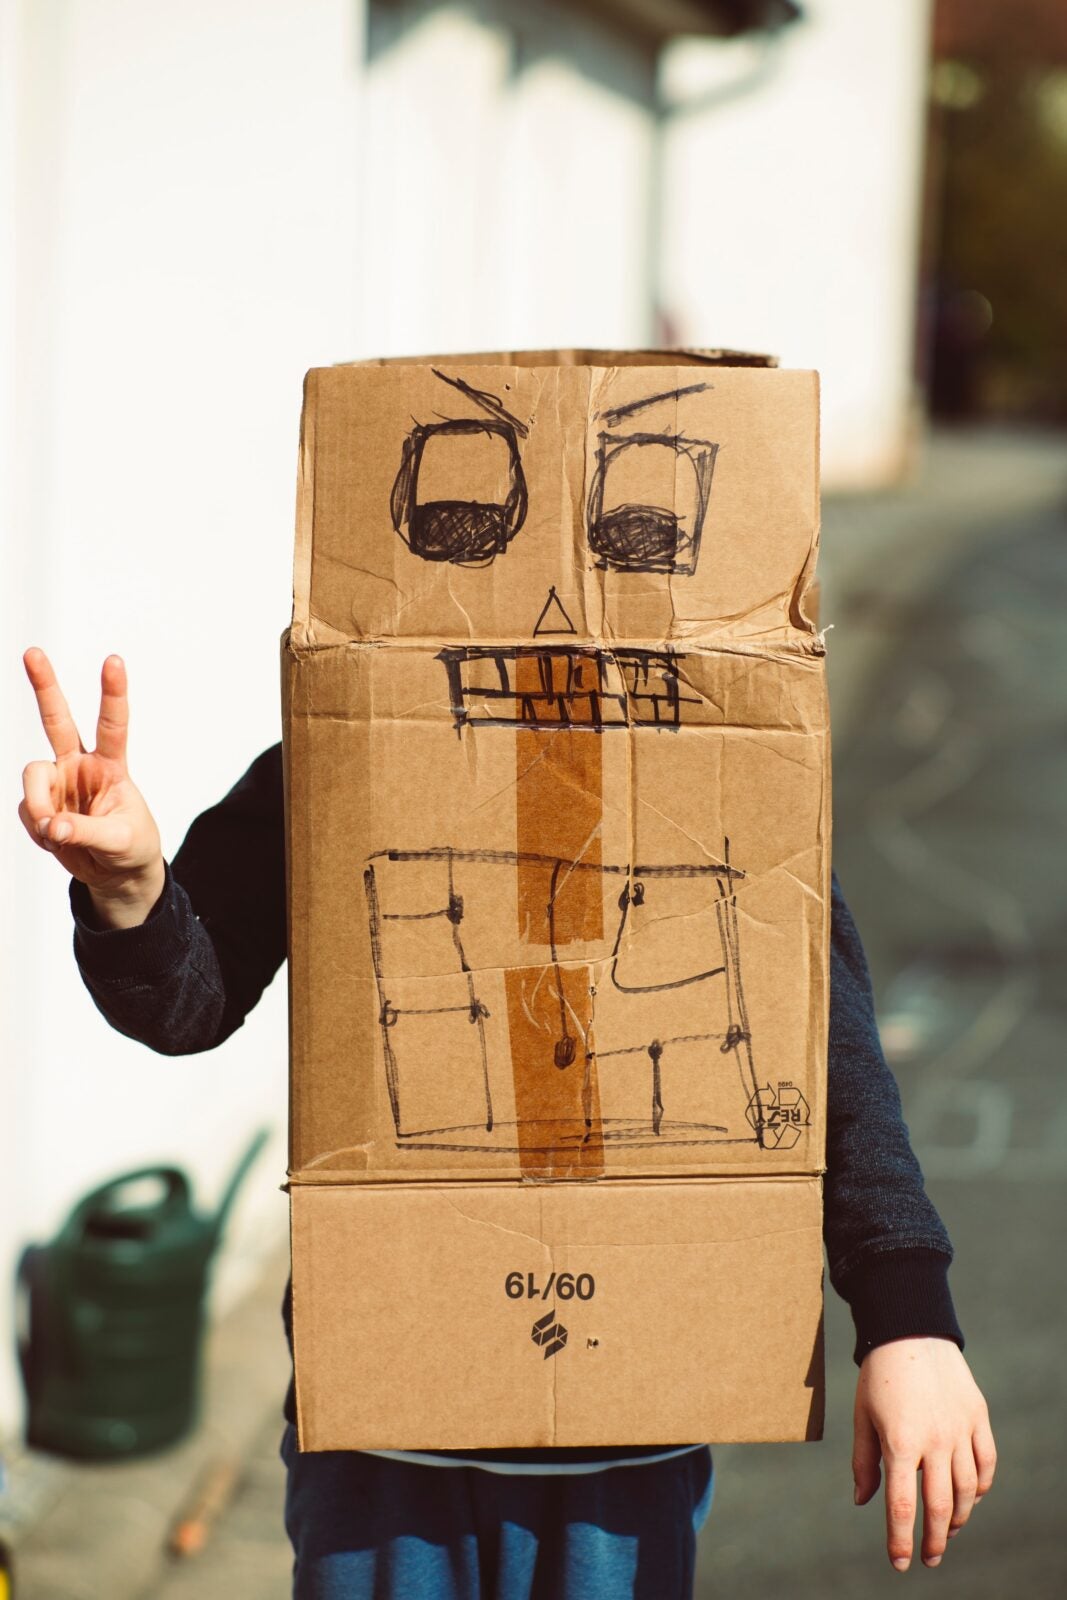 Boy with creative handmade cardboard box roboter simulation.